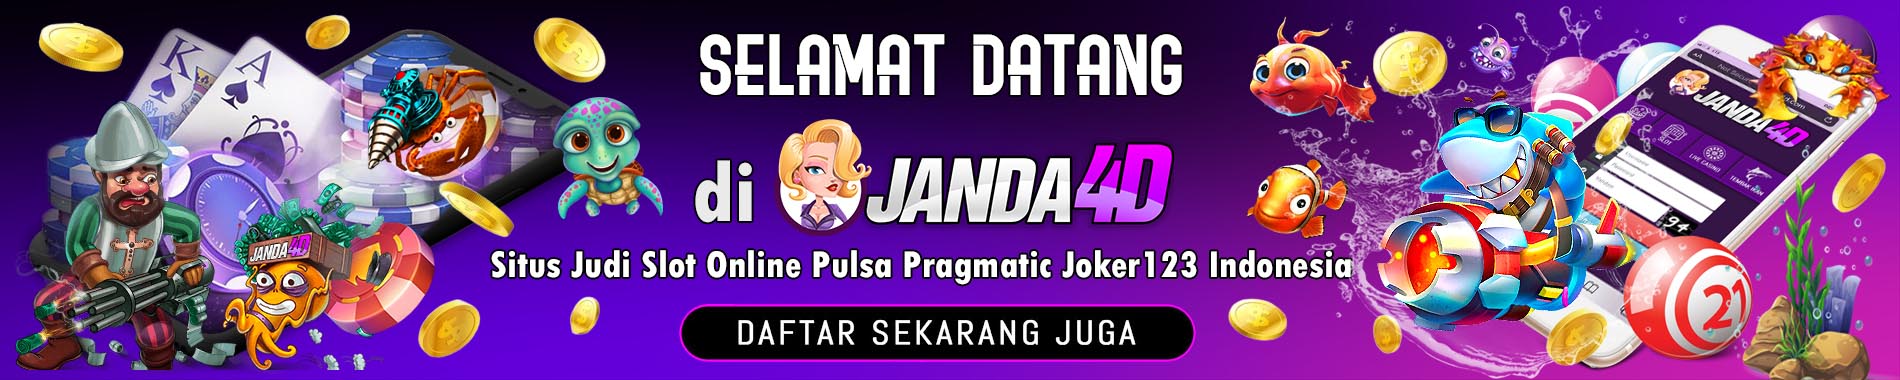 JANDA4D - Agen Situs Judi Slot Online JANDA4D